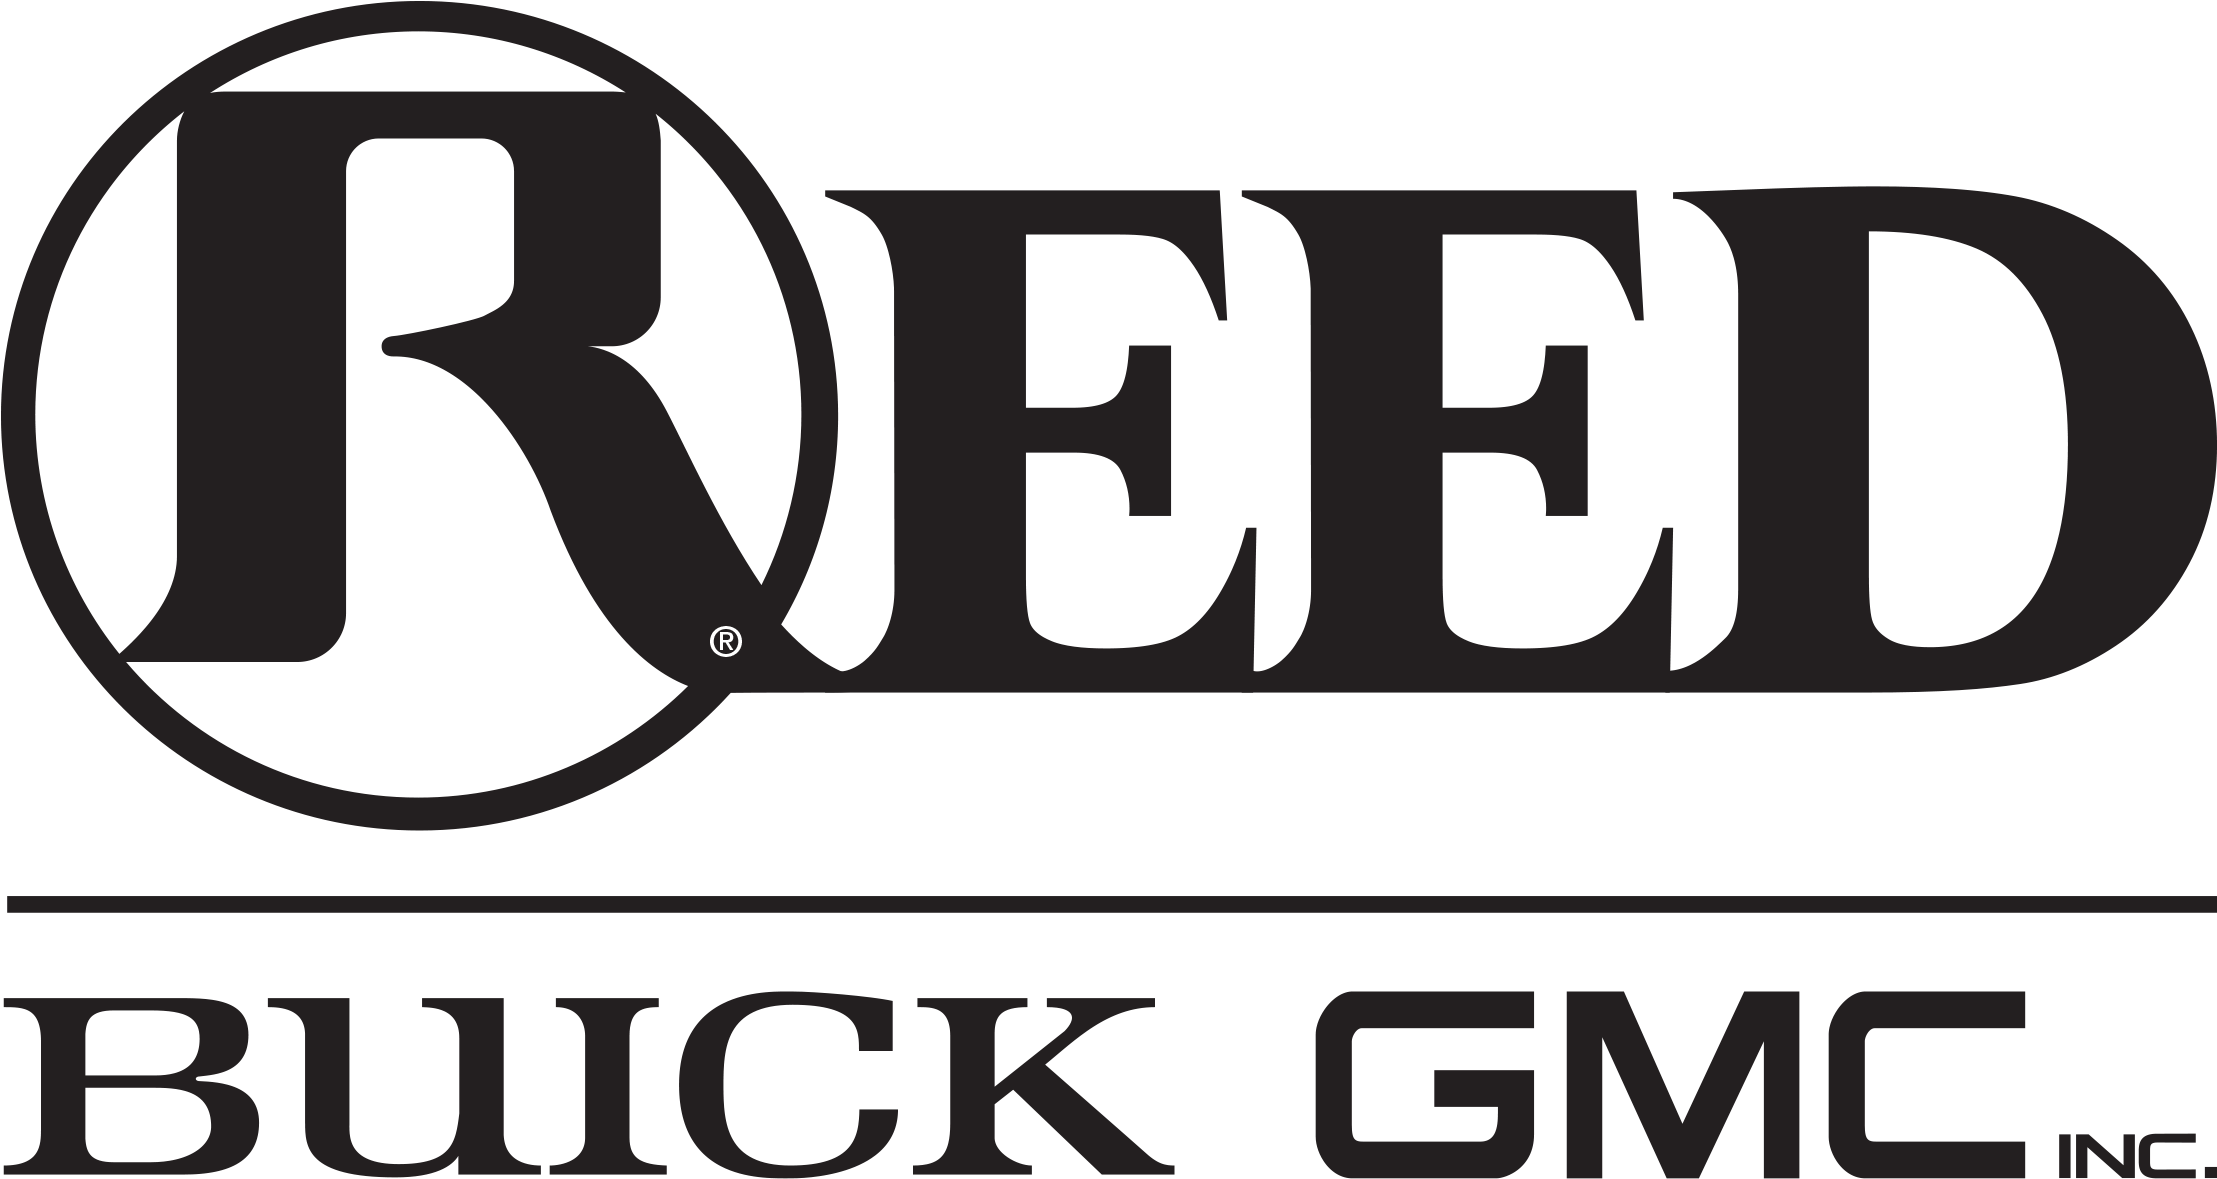 Reed Buick Gmc - Reed Chevrolet Saint Joseph Mo (2432x1230)